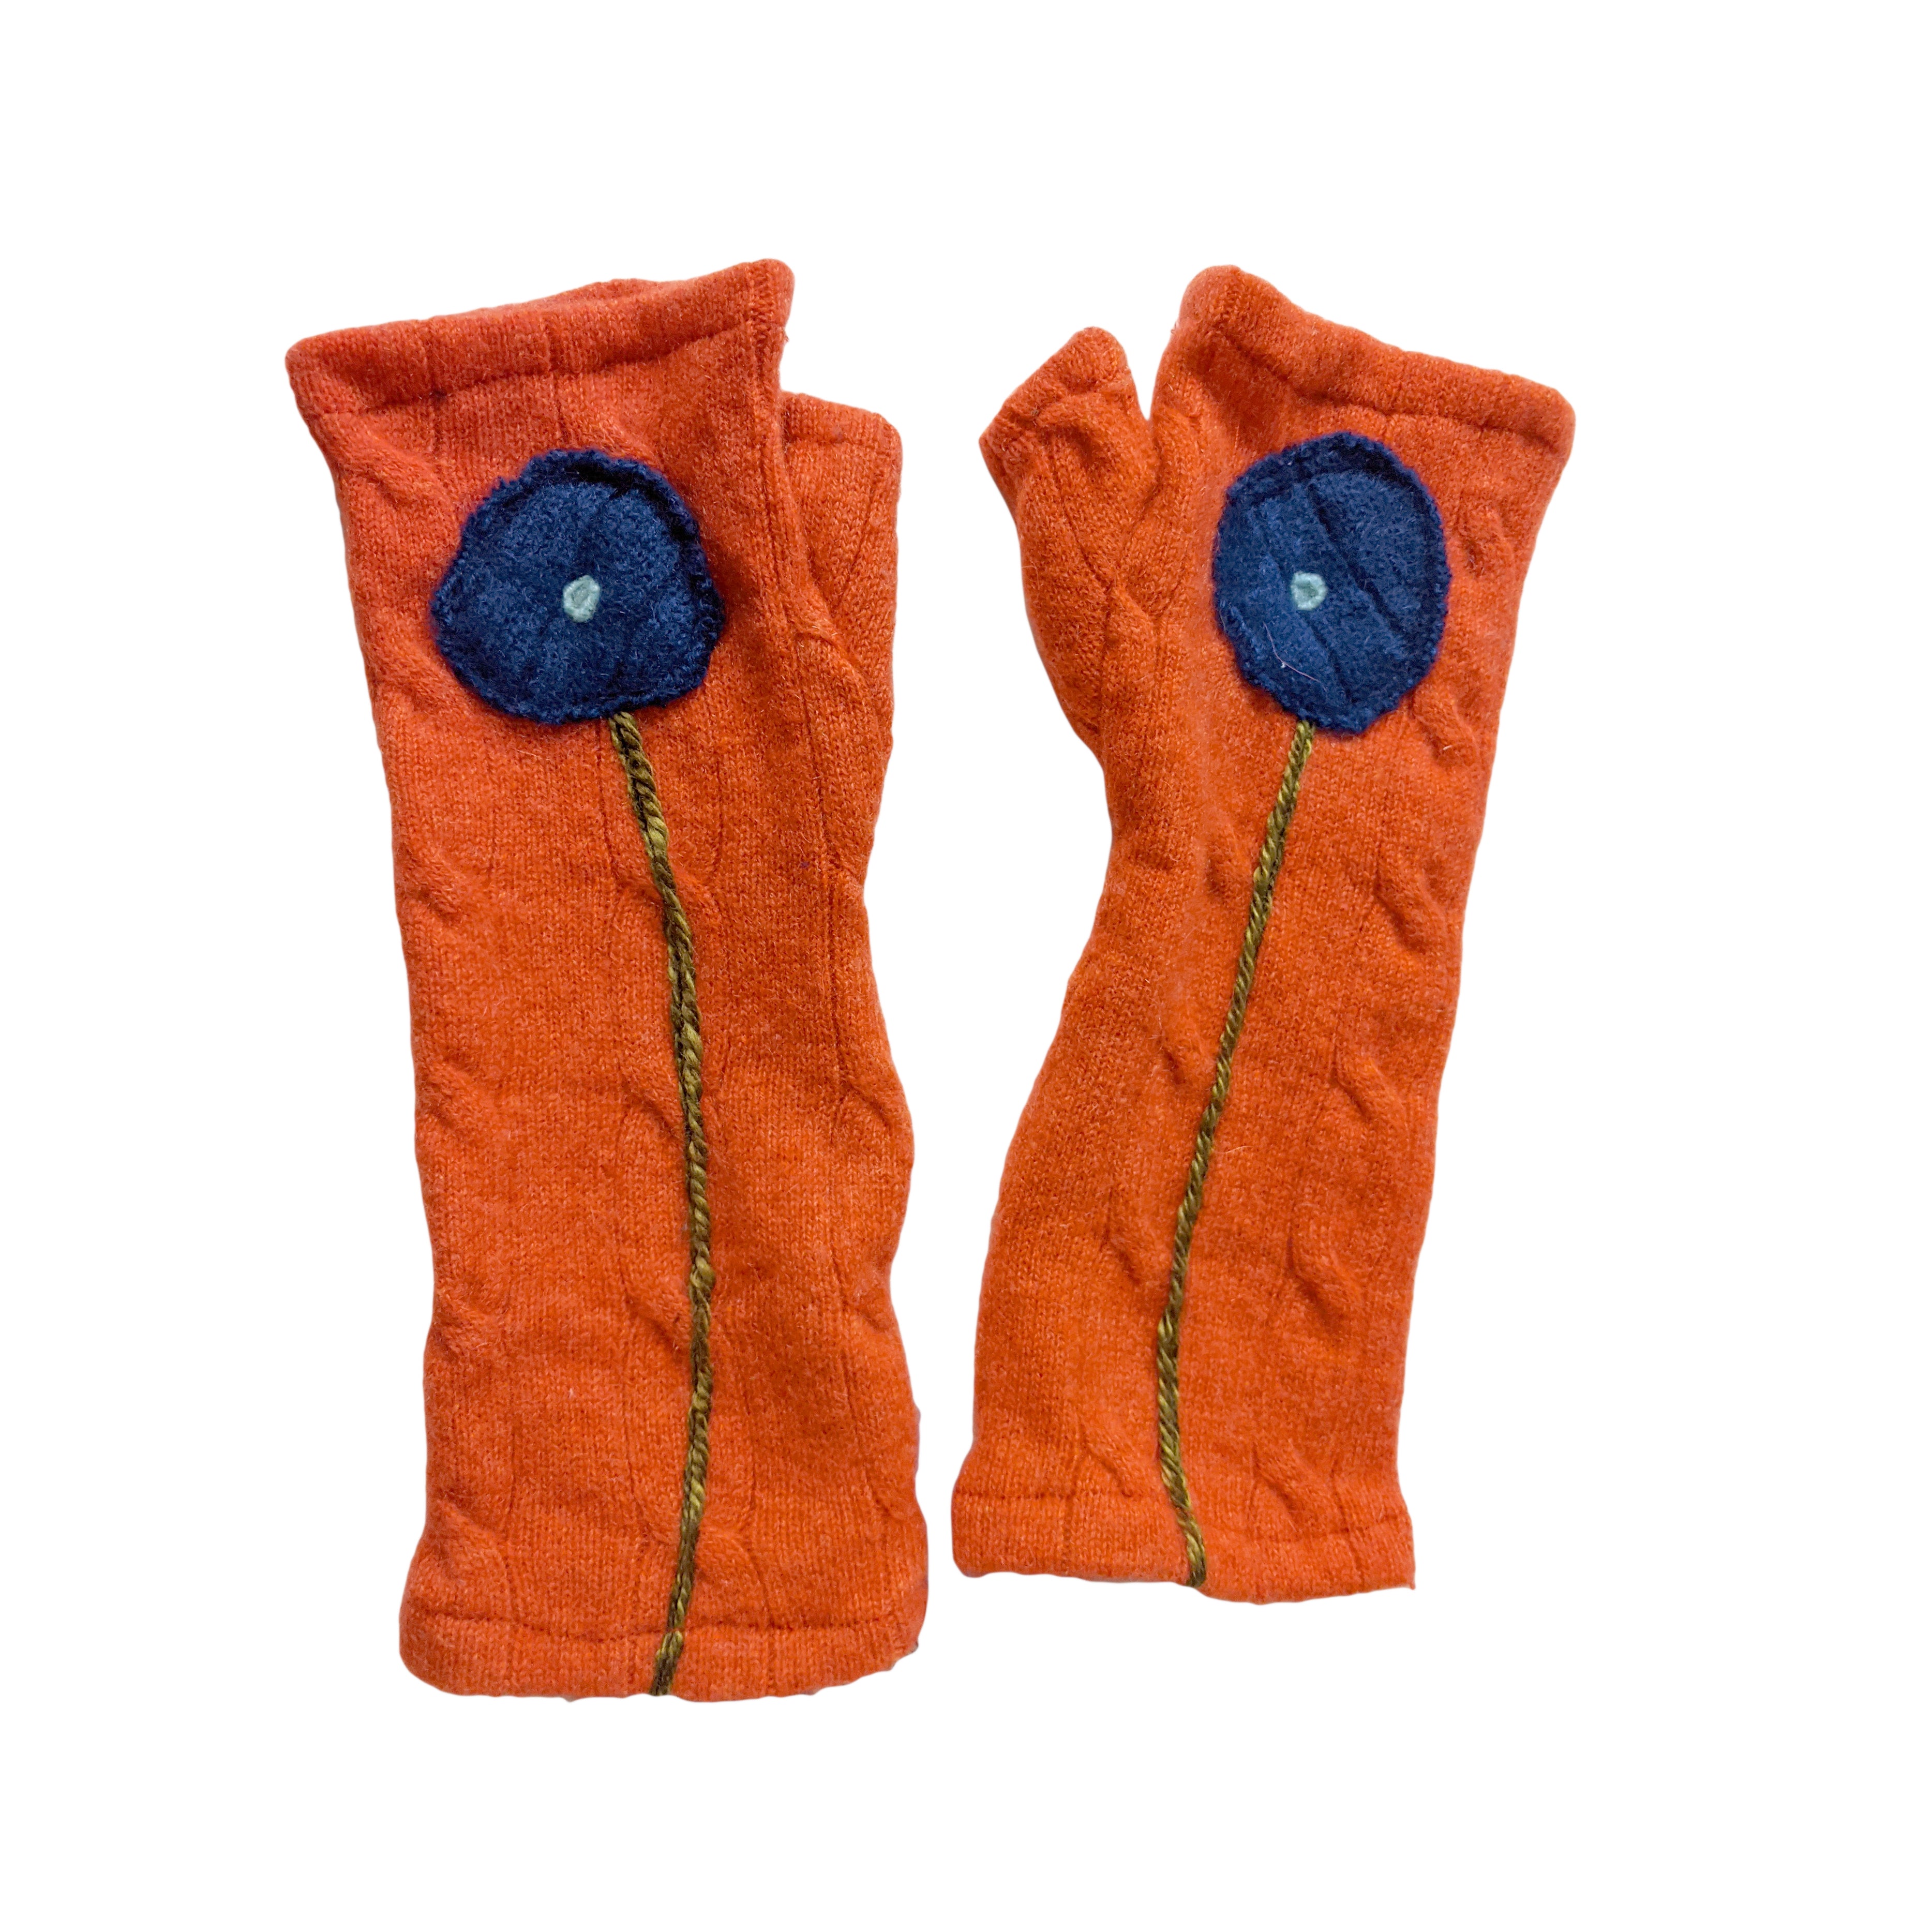 NEW! Orange with Blue Poppy Cashmere Gloves by Sardine